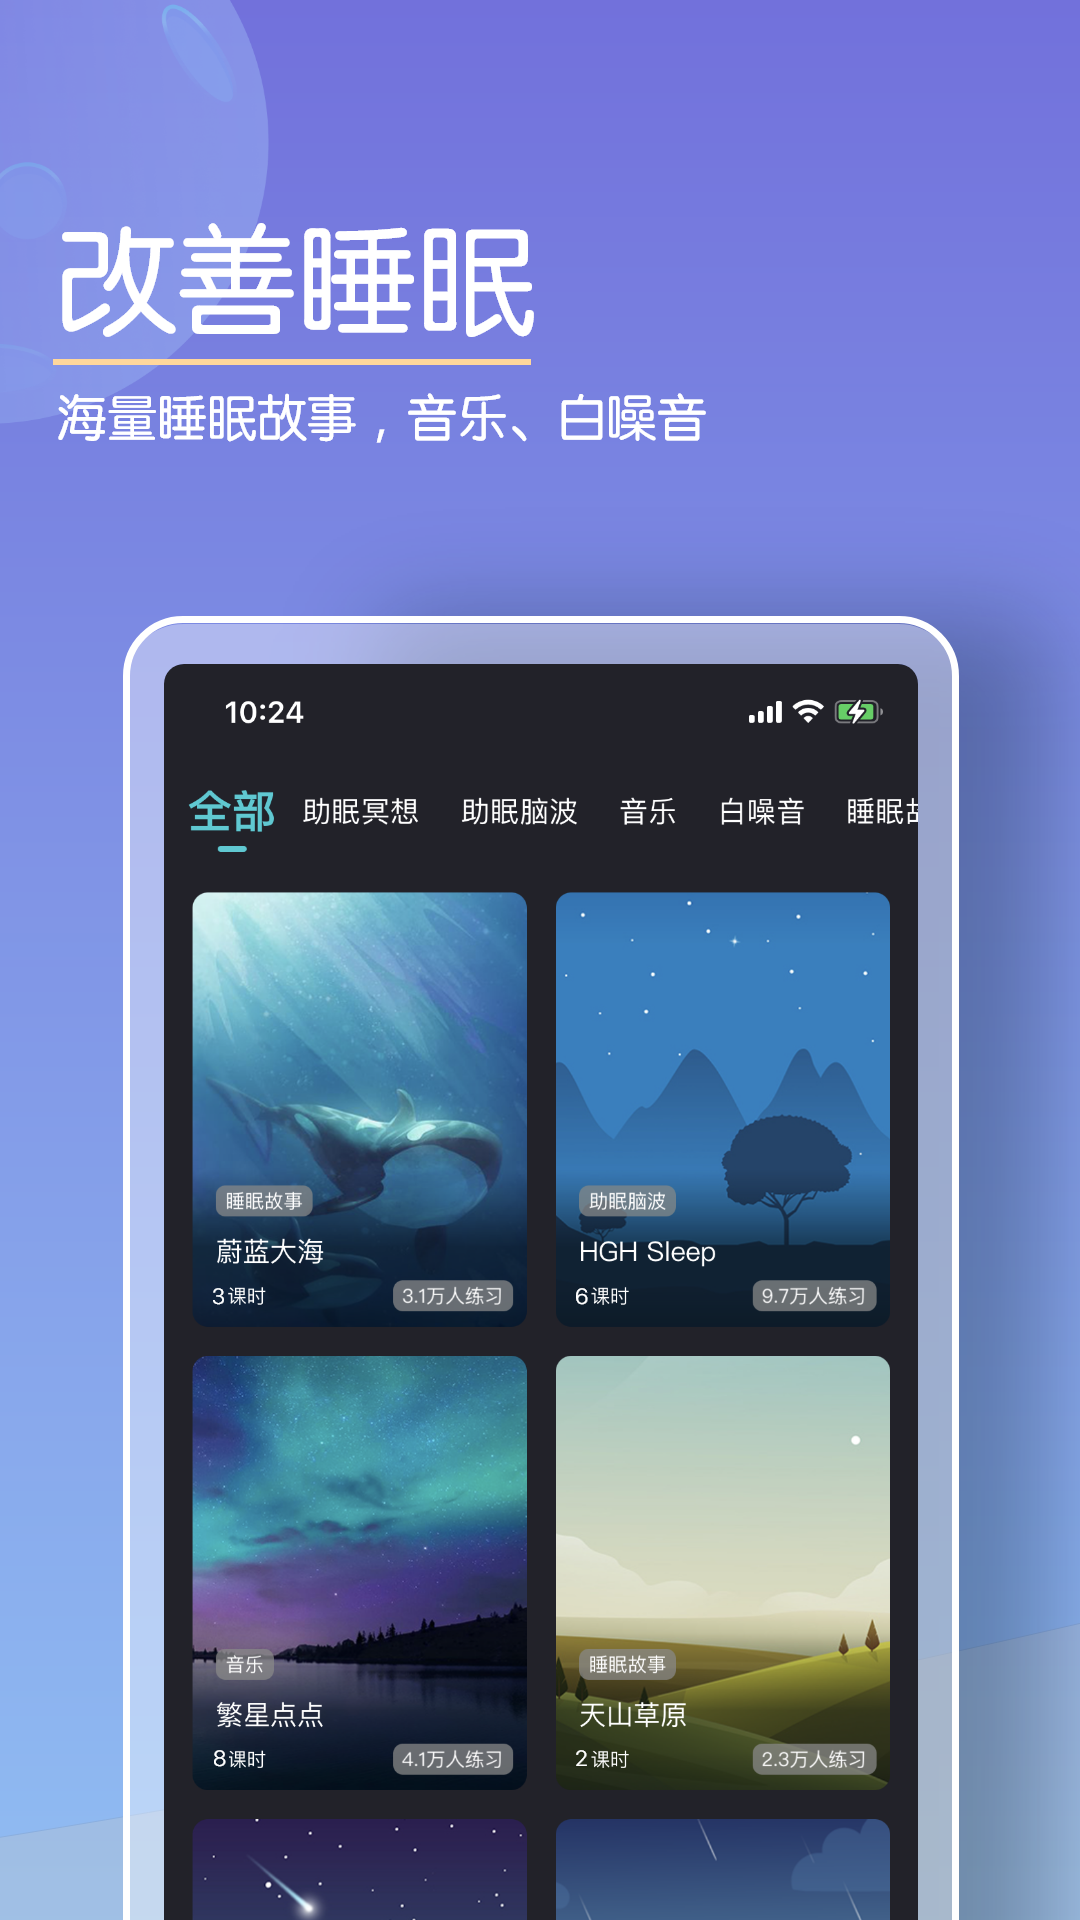 Now冥想app 4.4.4.14.5.4.1